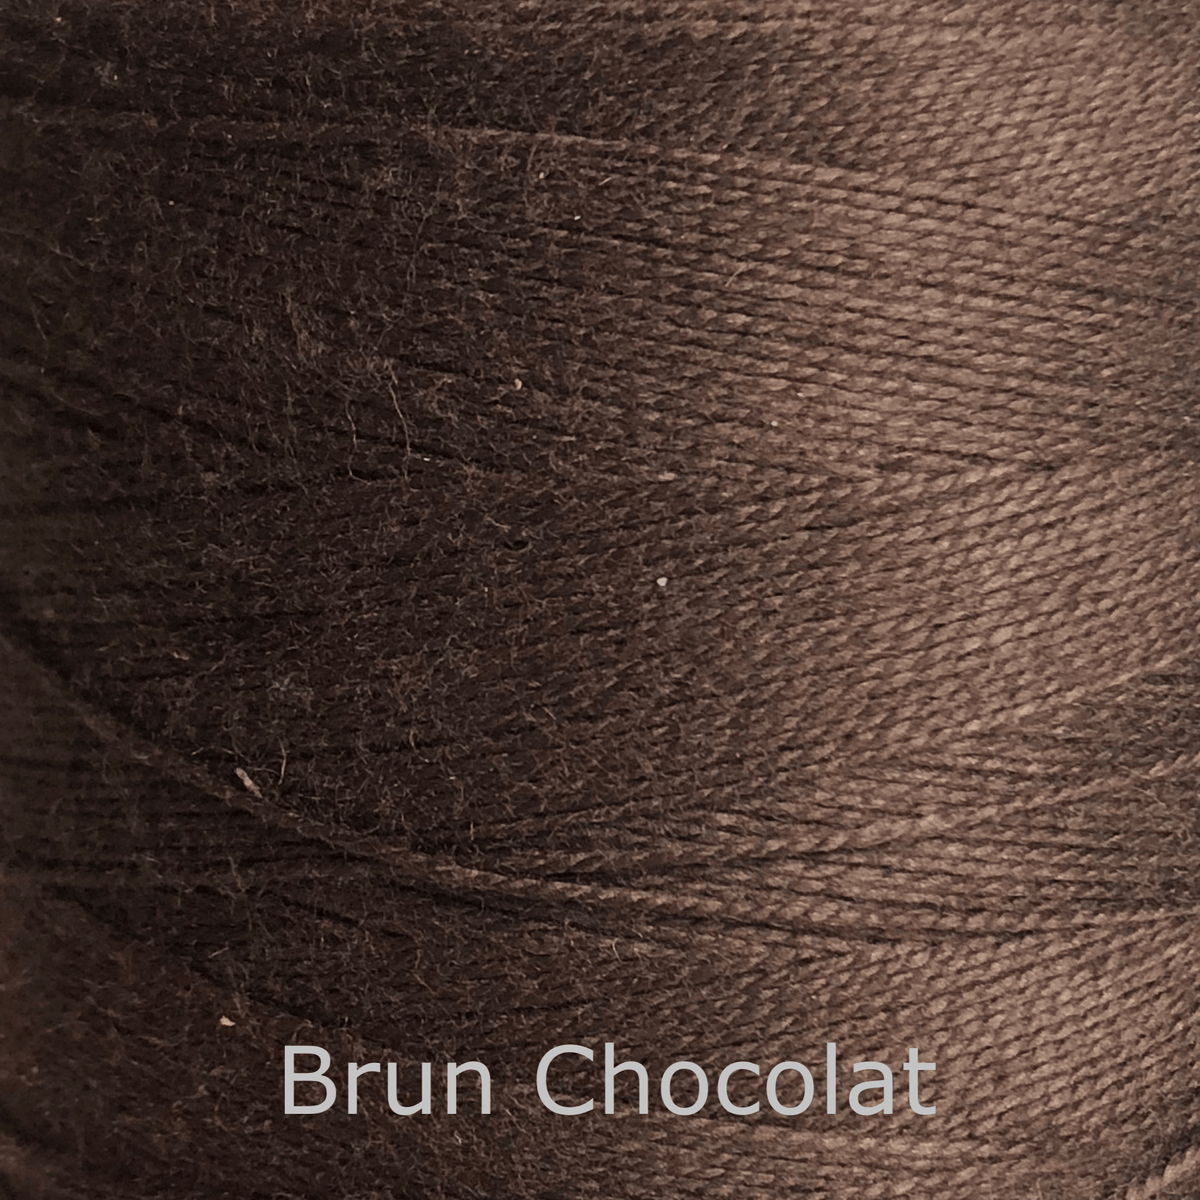 16/2 cotton weaving yarn brun chocolate